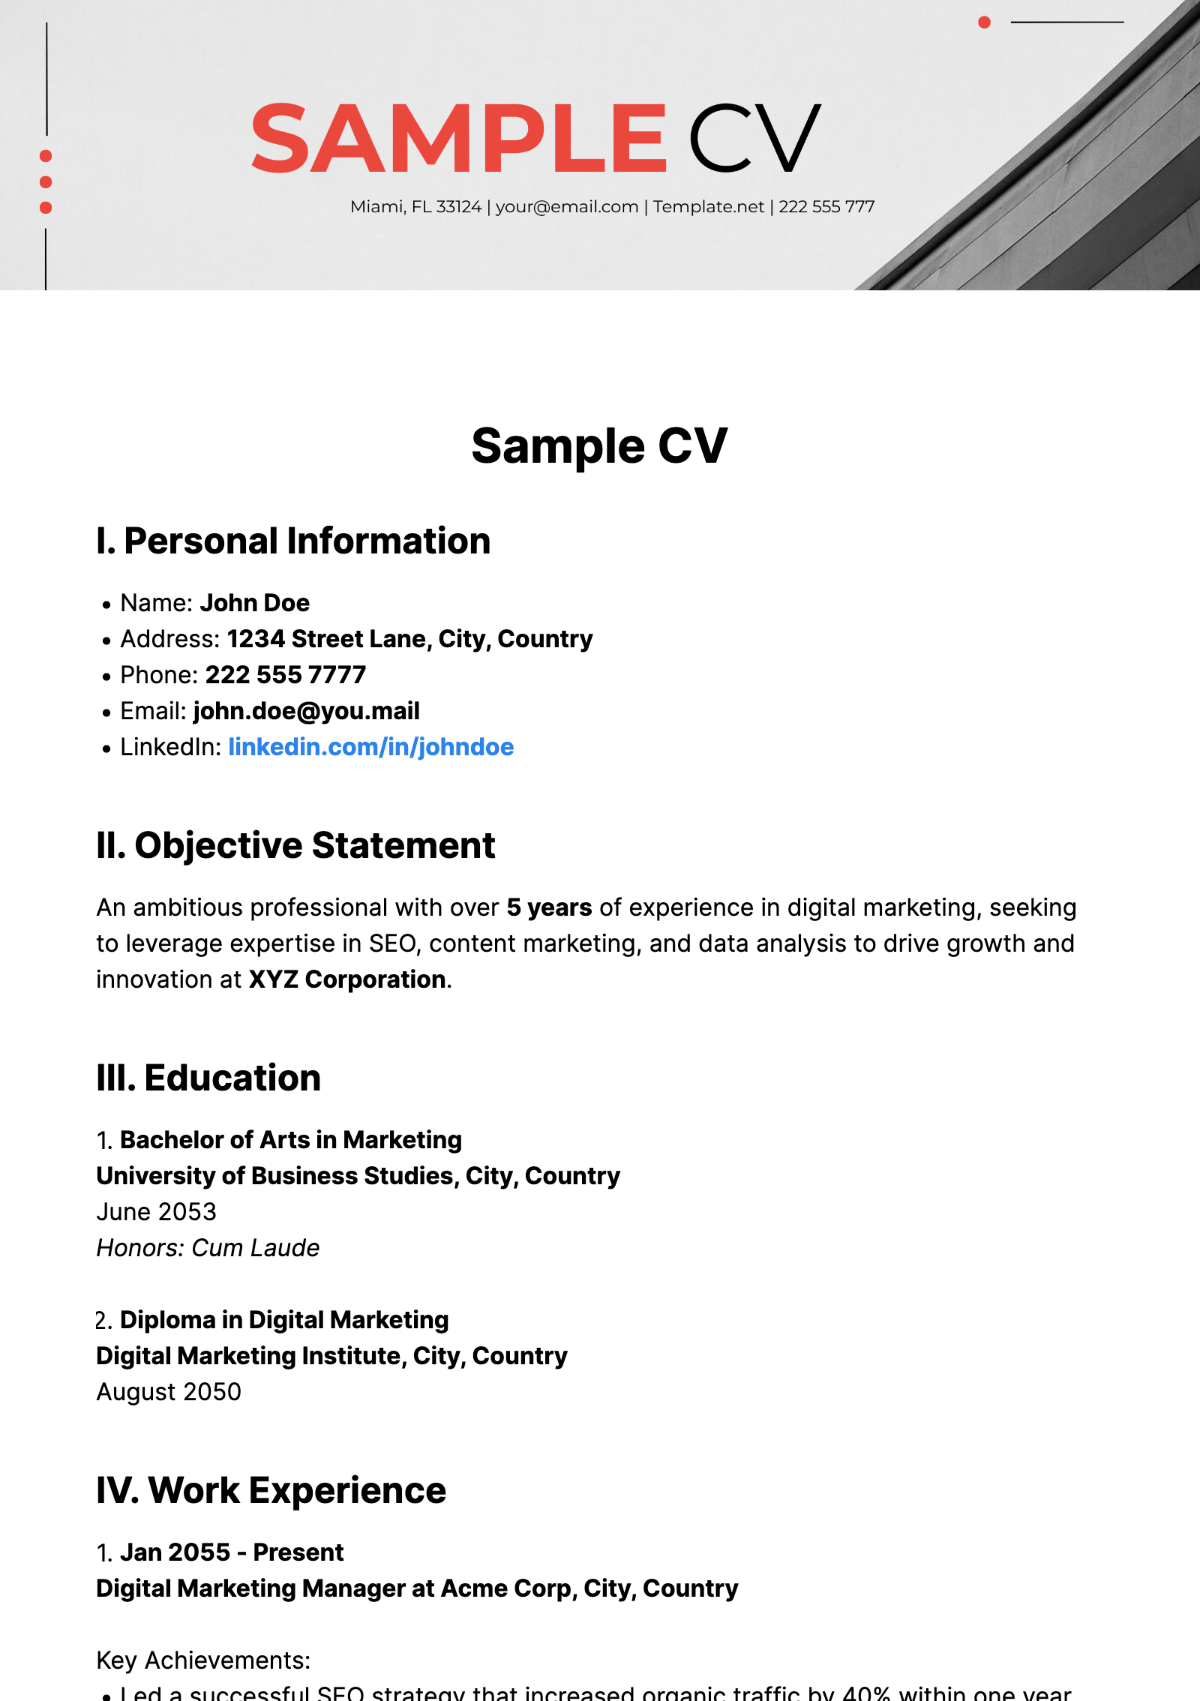 Sample CV Template